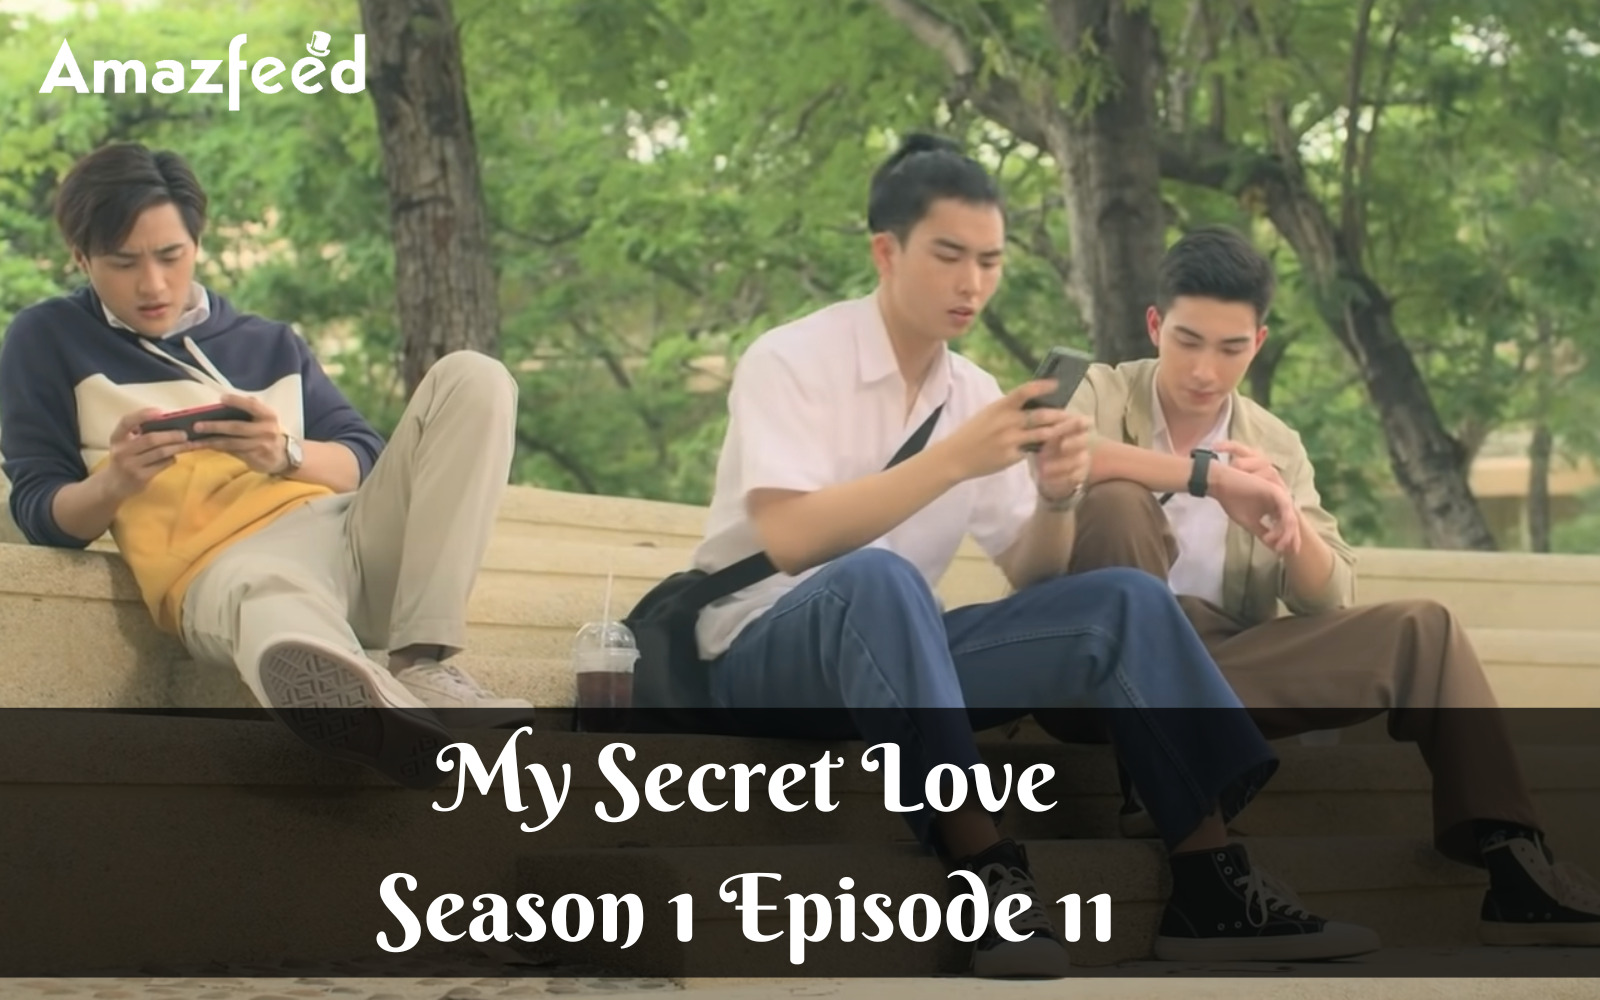 My Secret Love Season 1 Episode 11 Review, Rating, Recap & Where to